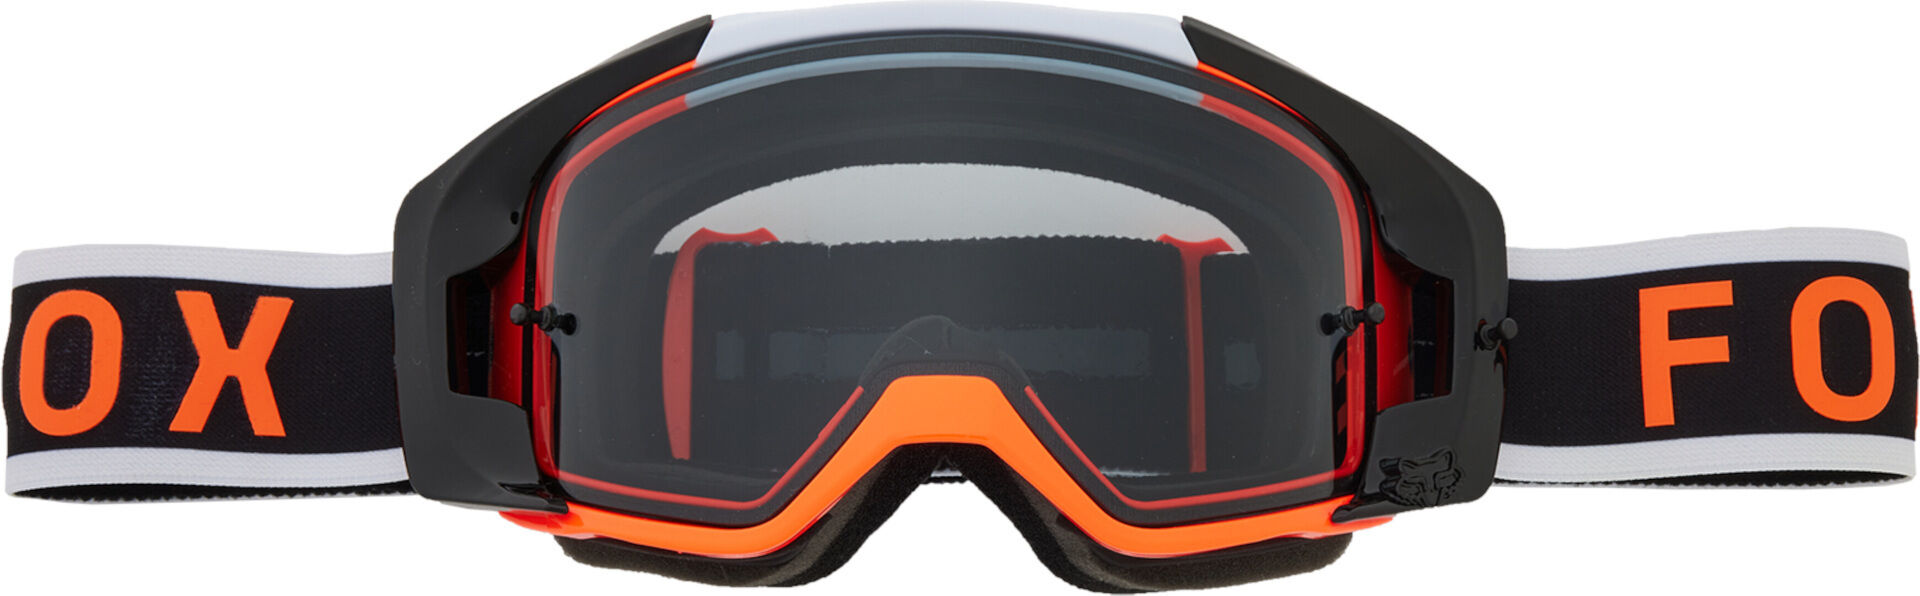 Fox Vue Magnetic Gafas de motocross - Negro Blanco Naranja (un tamaño)